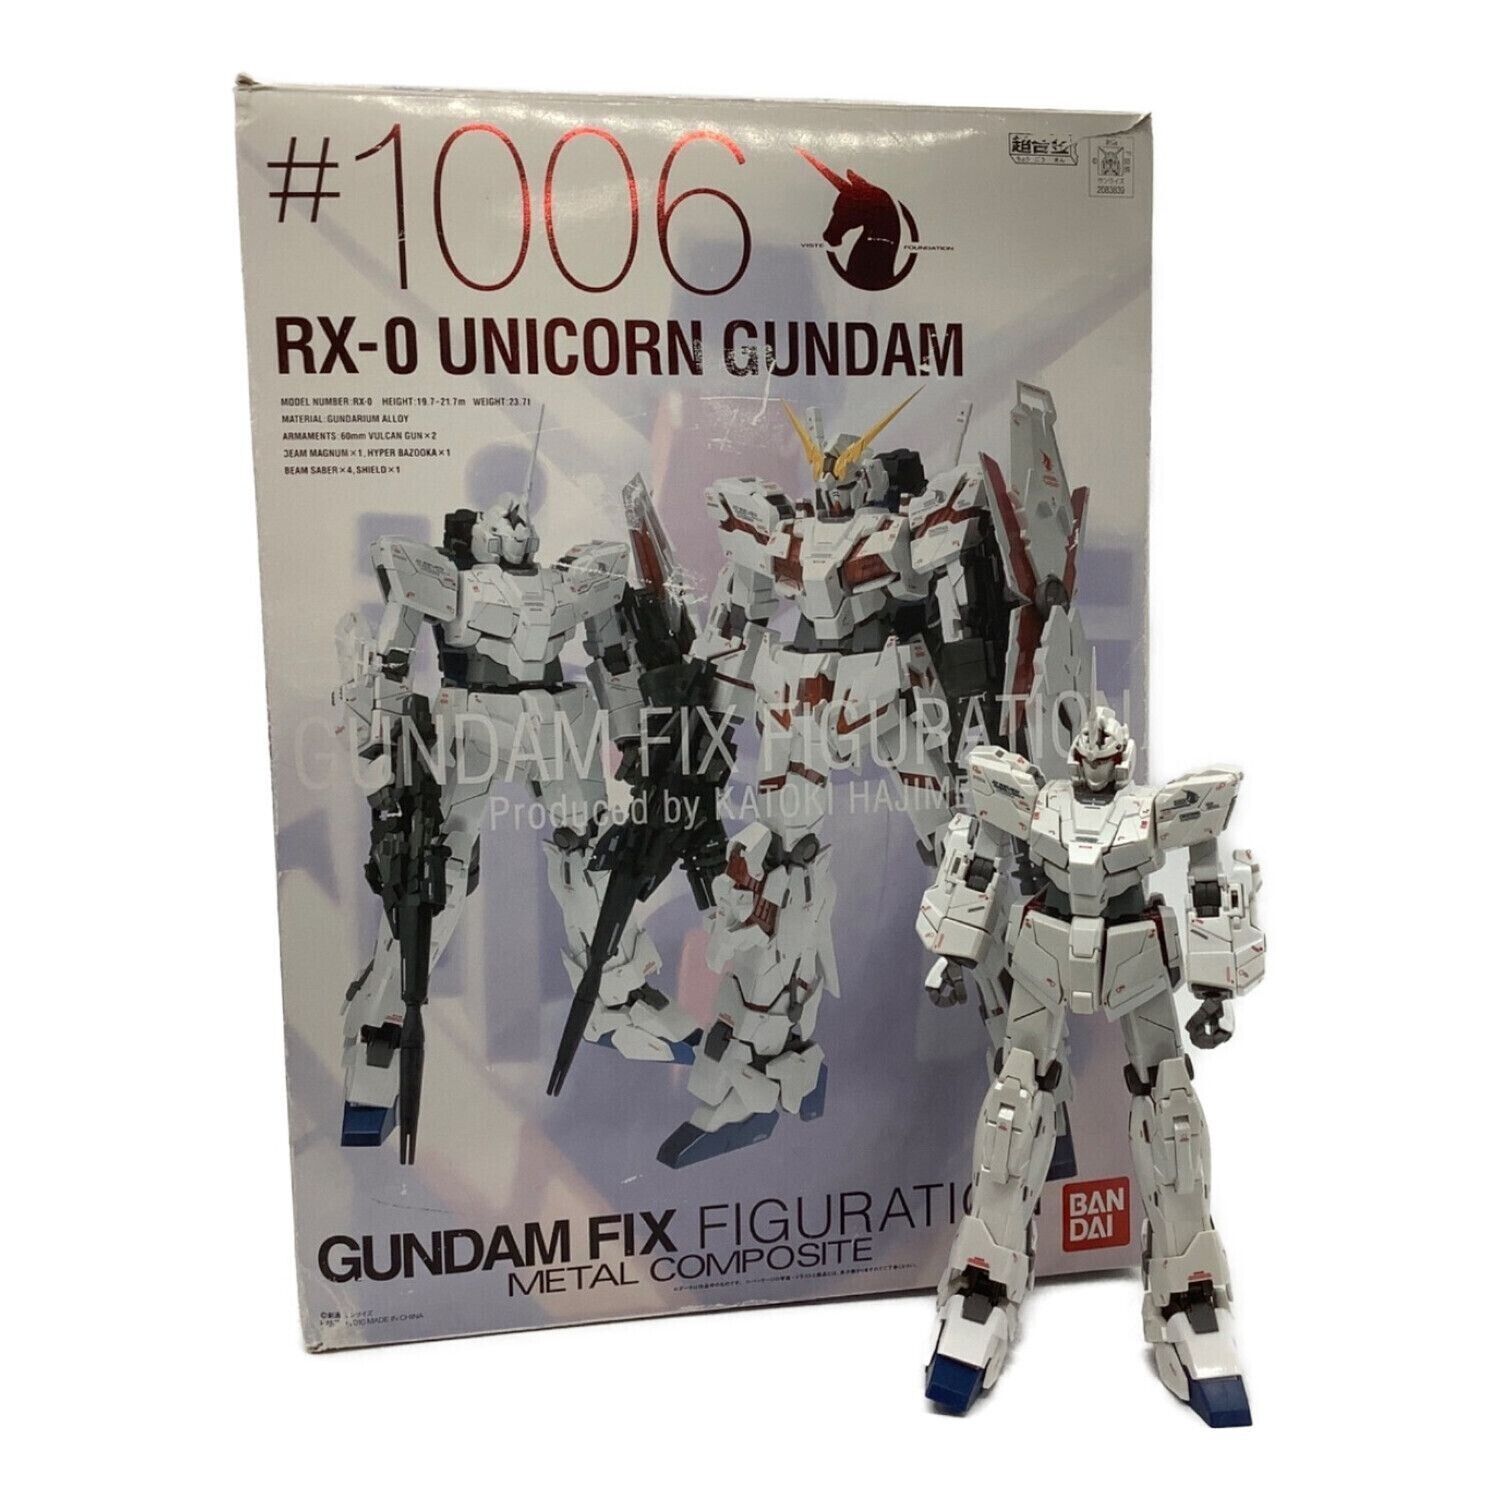 Gundam Fix Figuration Metal Composite #1006 RX-0 Unicorn Gundam Bandai Excellent